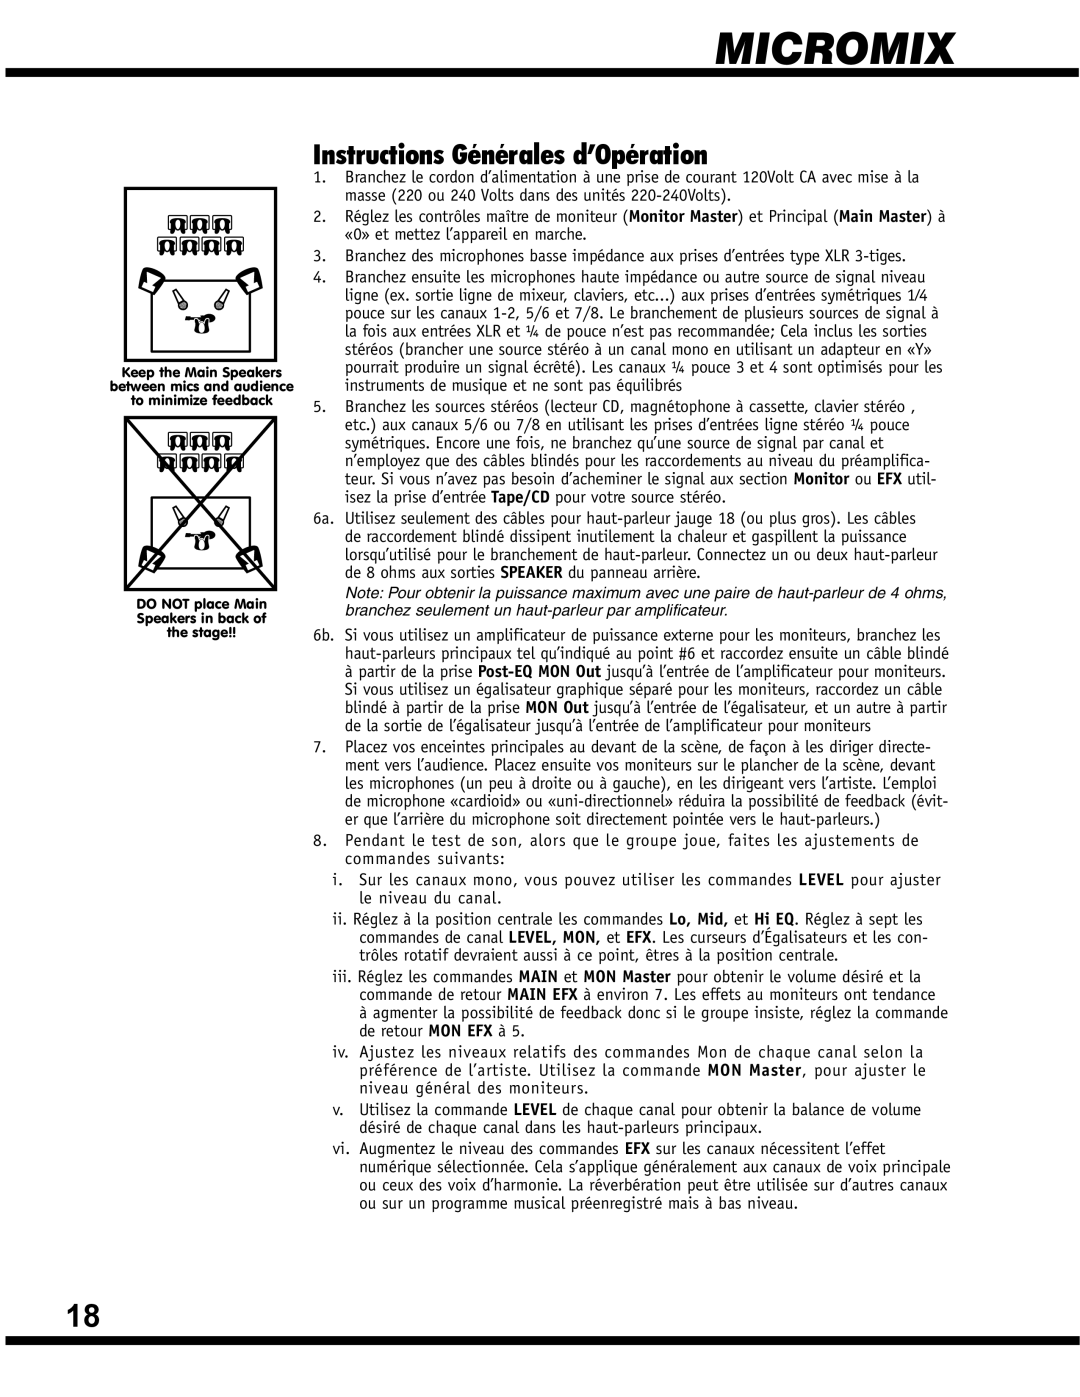 Yorkville Sound YS 1088 manual Instructions Générales d’Opération, Micromix 